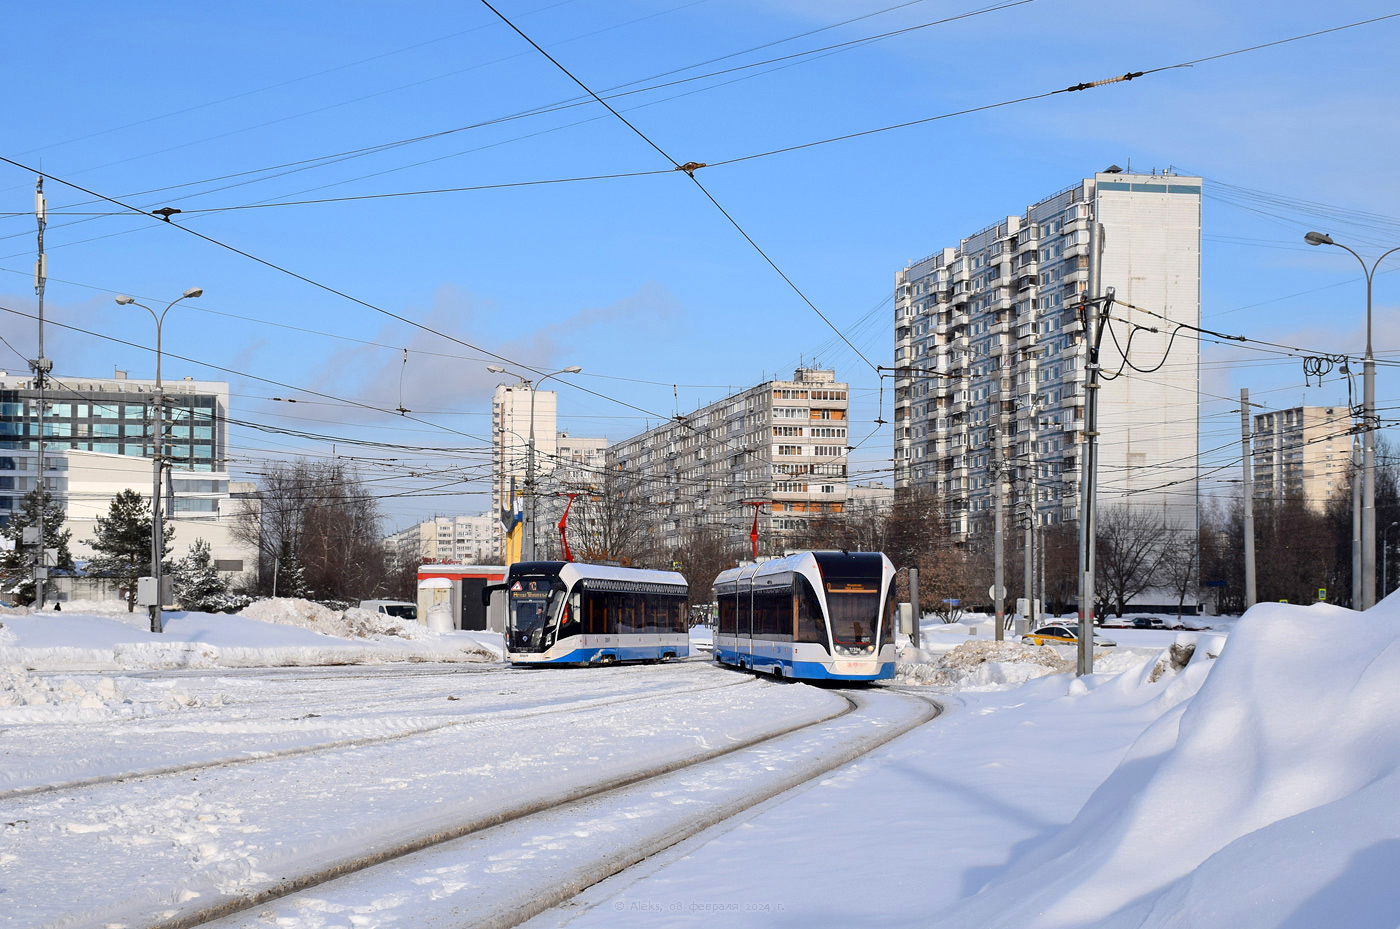 Moscow, 71-911EM “Lvyonok” # 30619; Moscow, 71-931M “Vityaz-M” # 31396; Moscow — Terminus stations